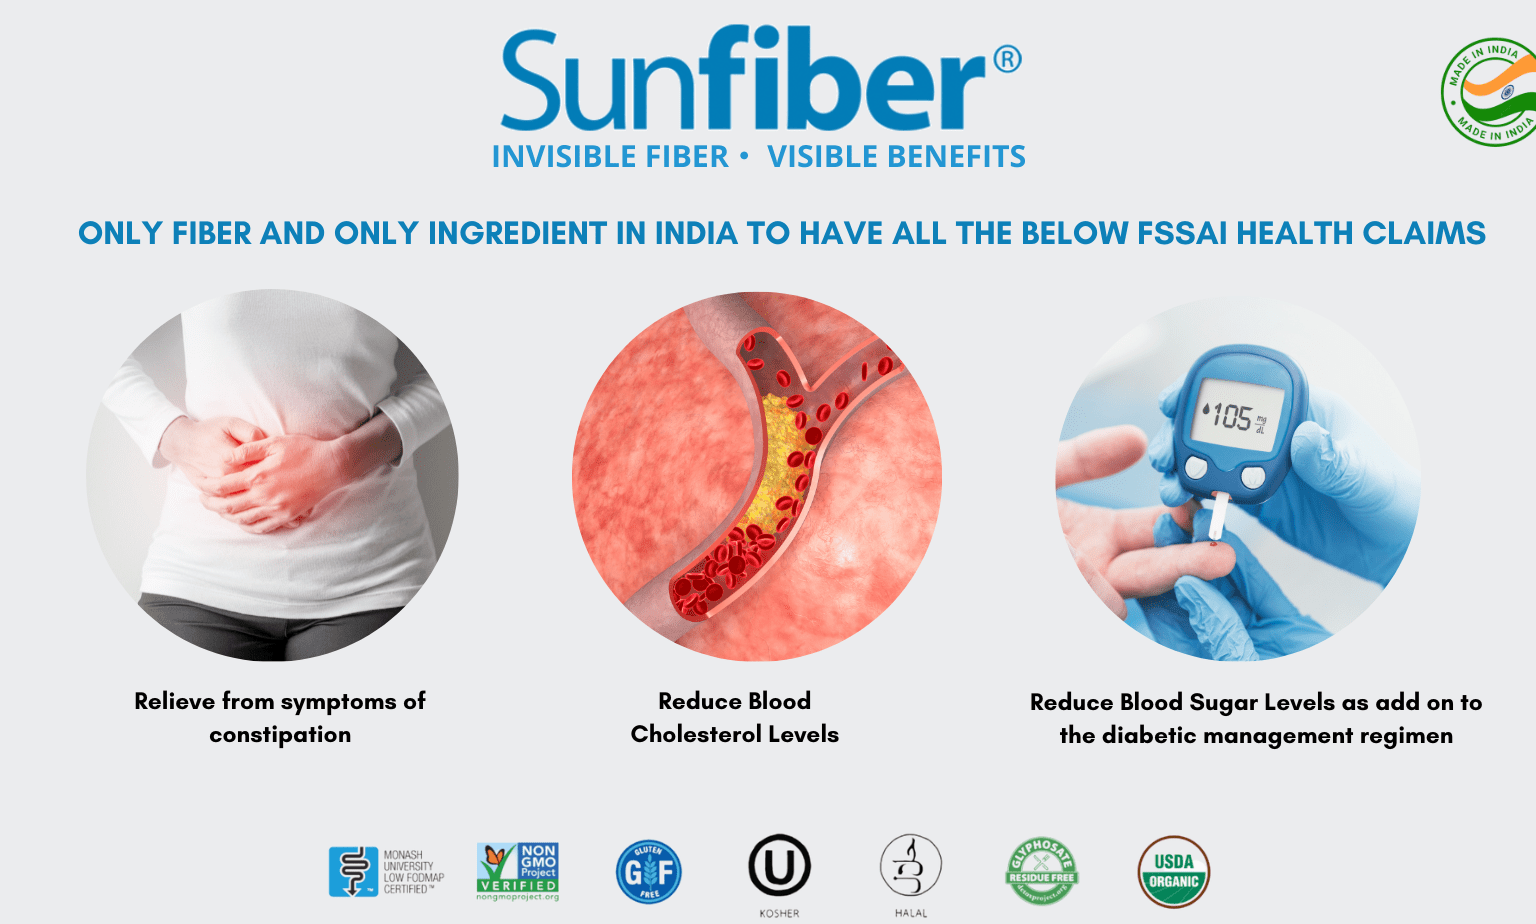 Sunfiber FSSAI Health Claims